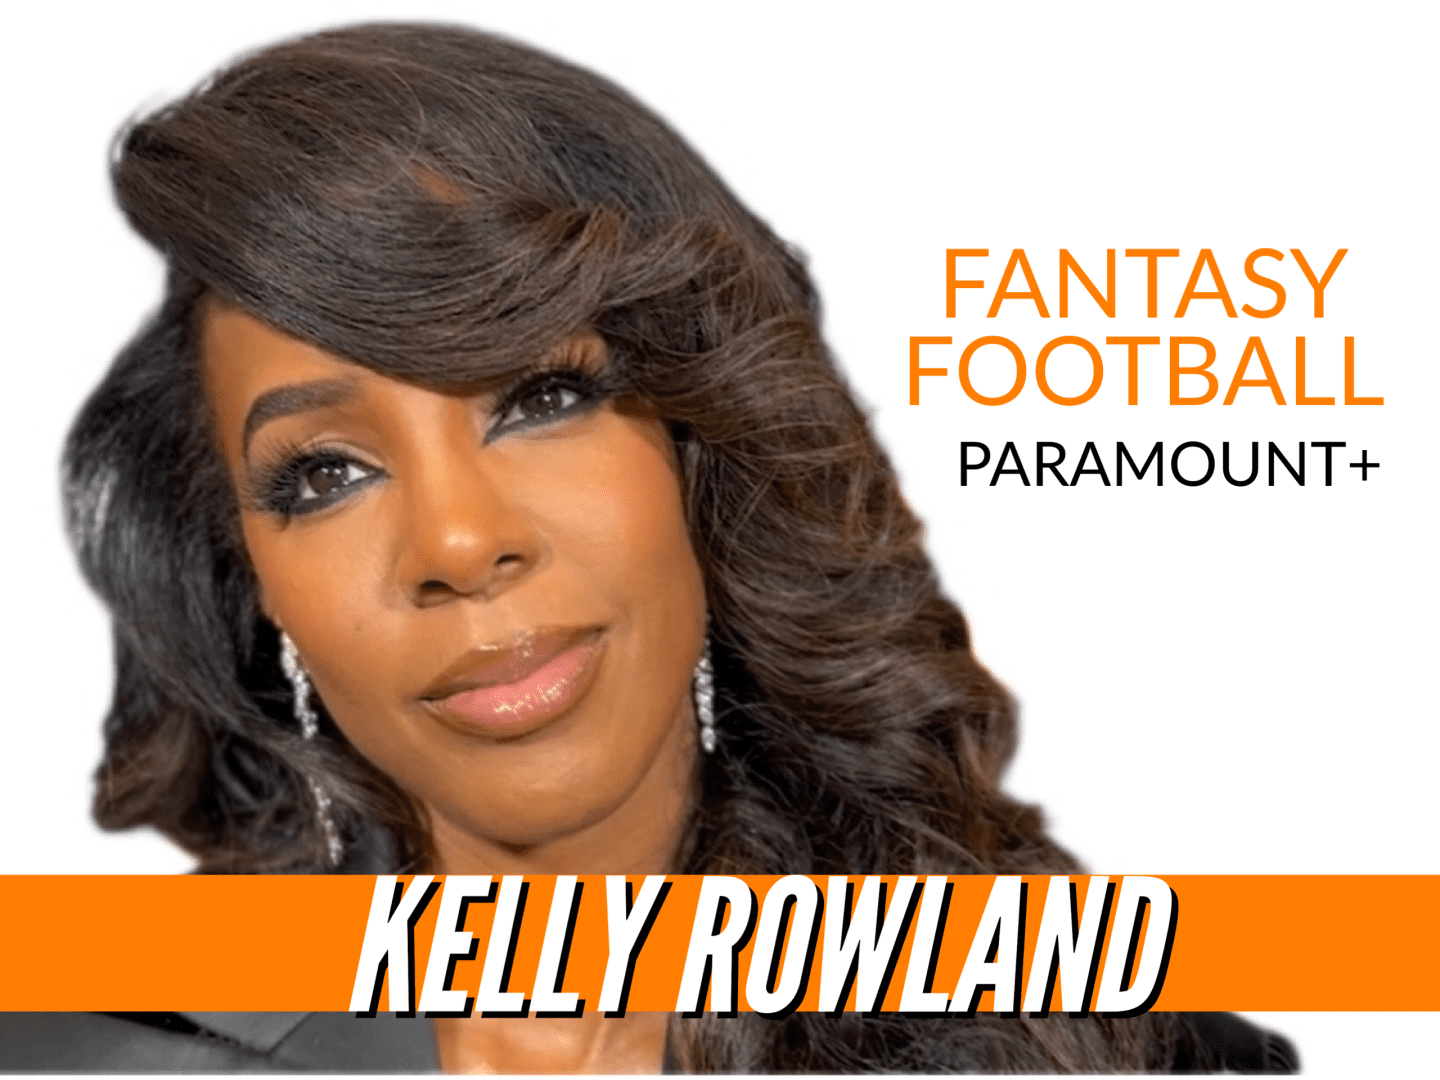 Kelly Rowland stars in the new Nickelodeon film 'Fantasy Football'